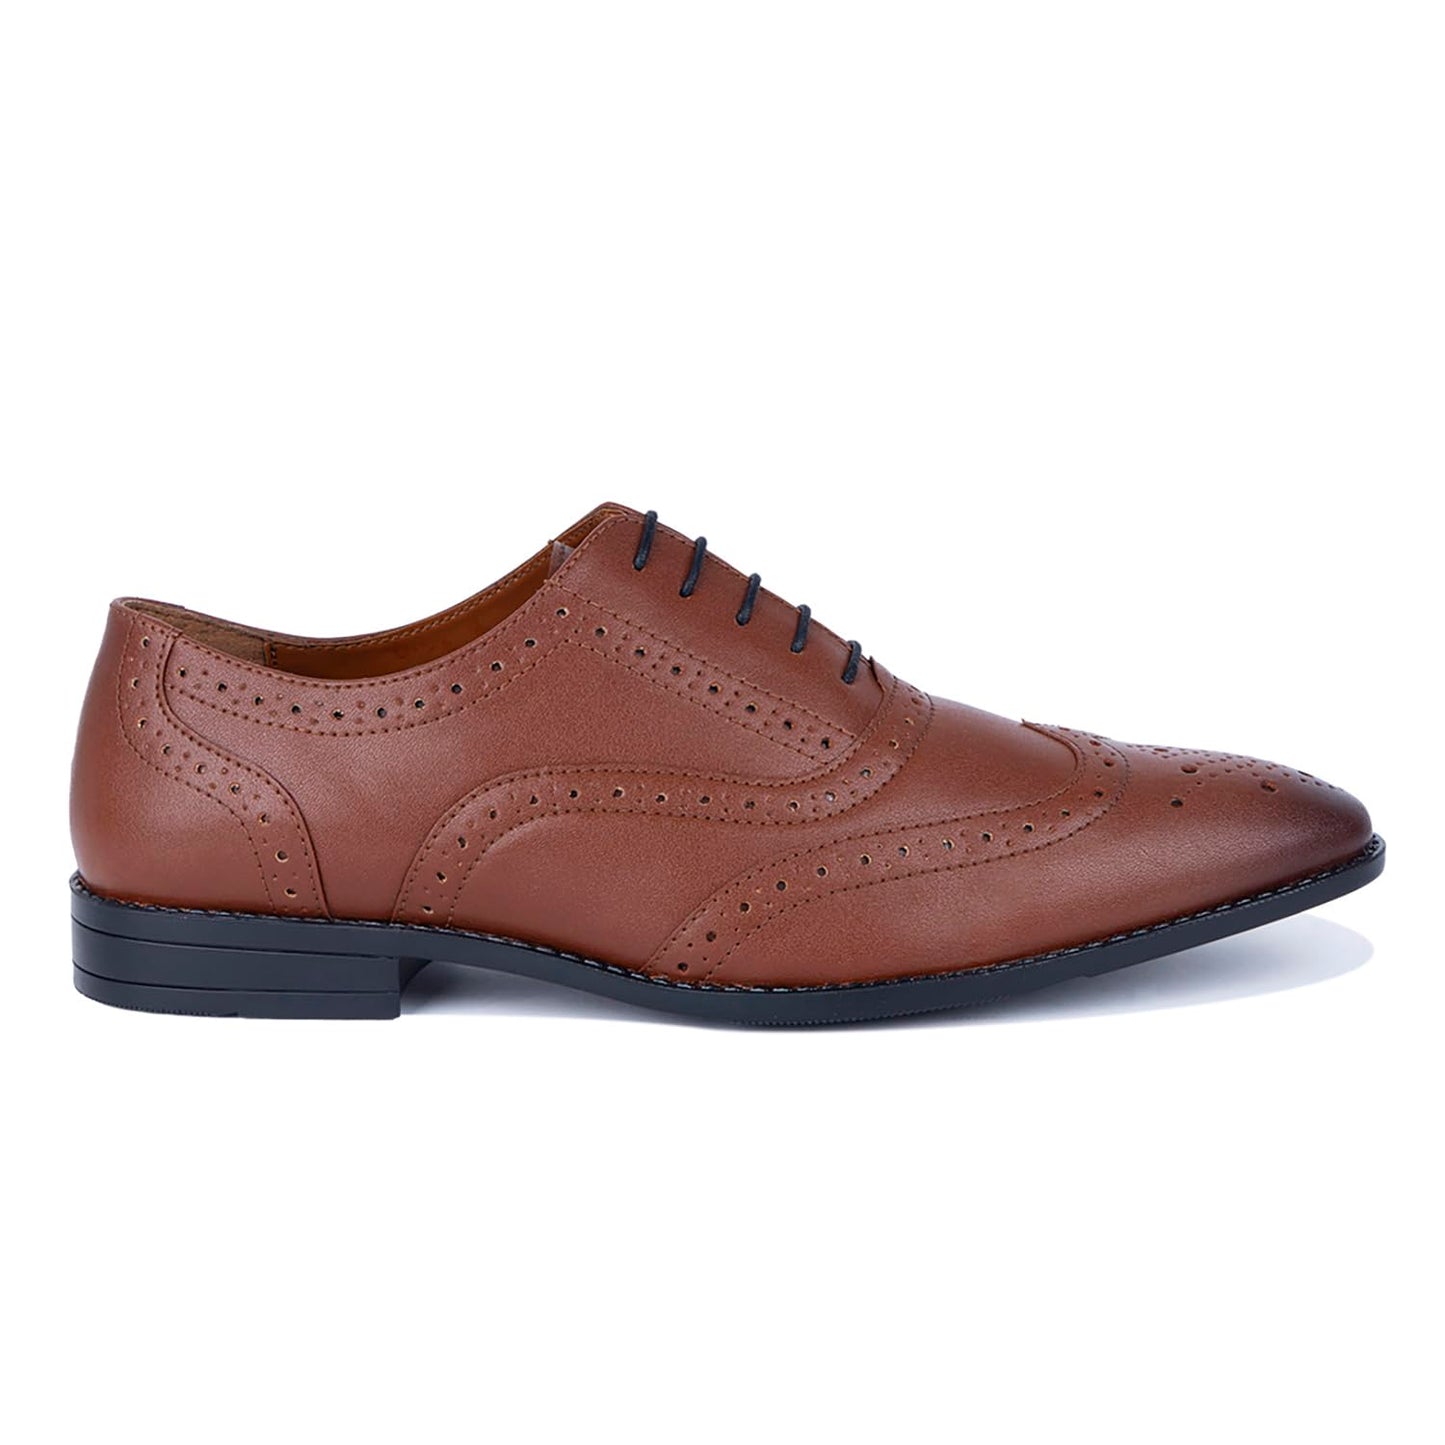 LOUIS STITCH Men's American Tan Wingtip Brogue Style Comfortable Formal Shoes Lace Up Shoe for Men (RGBG-) (Size- 11 UK)